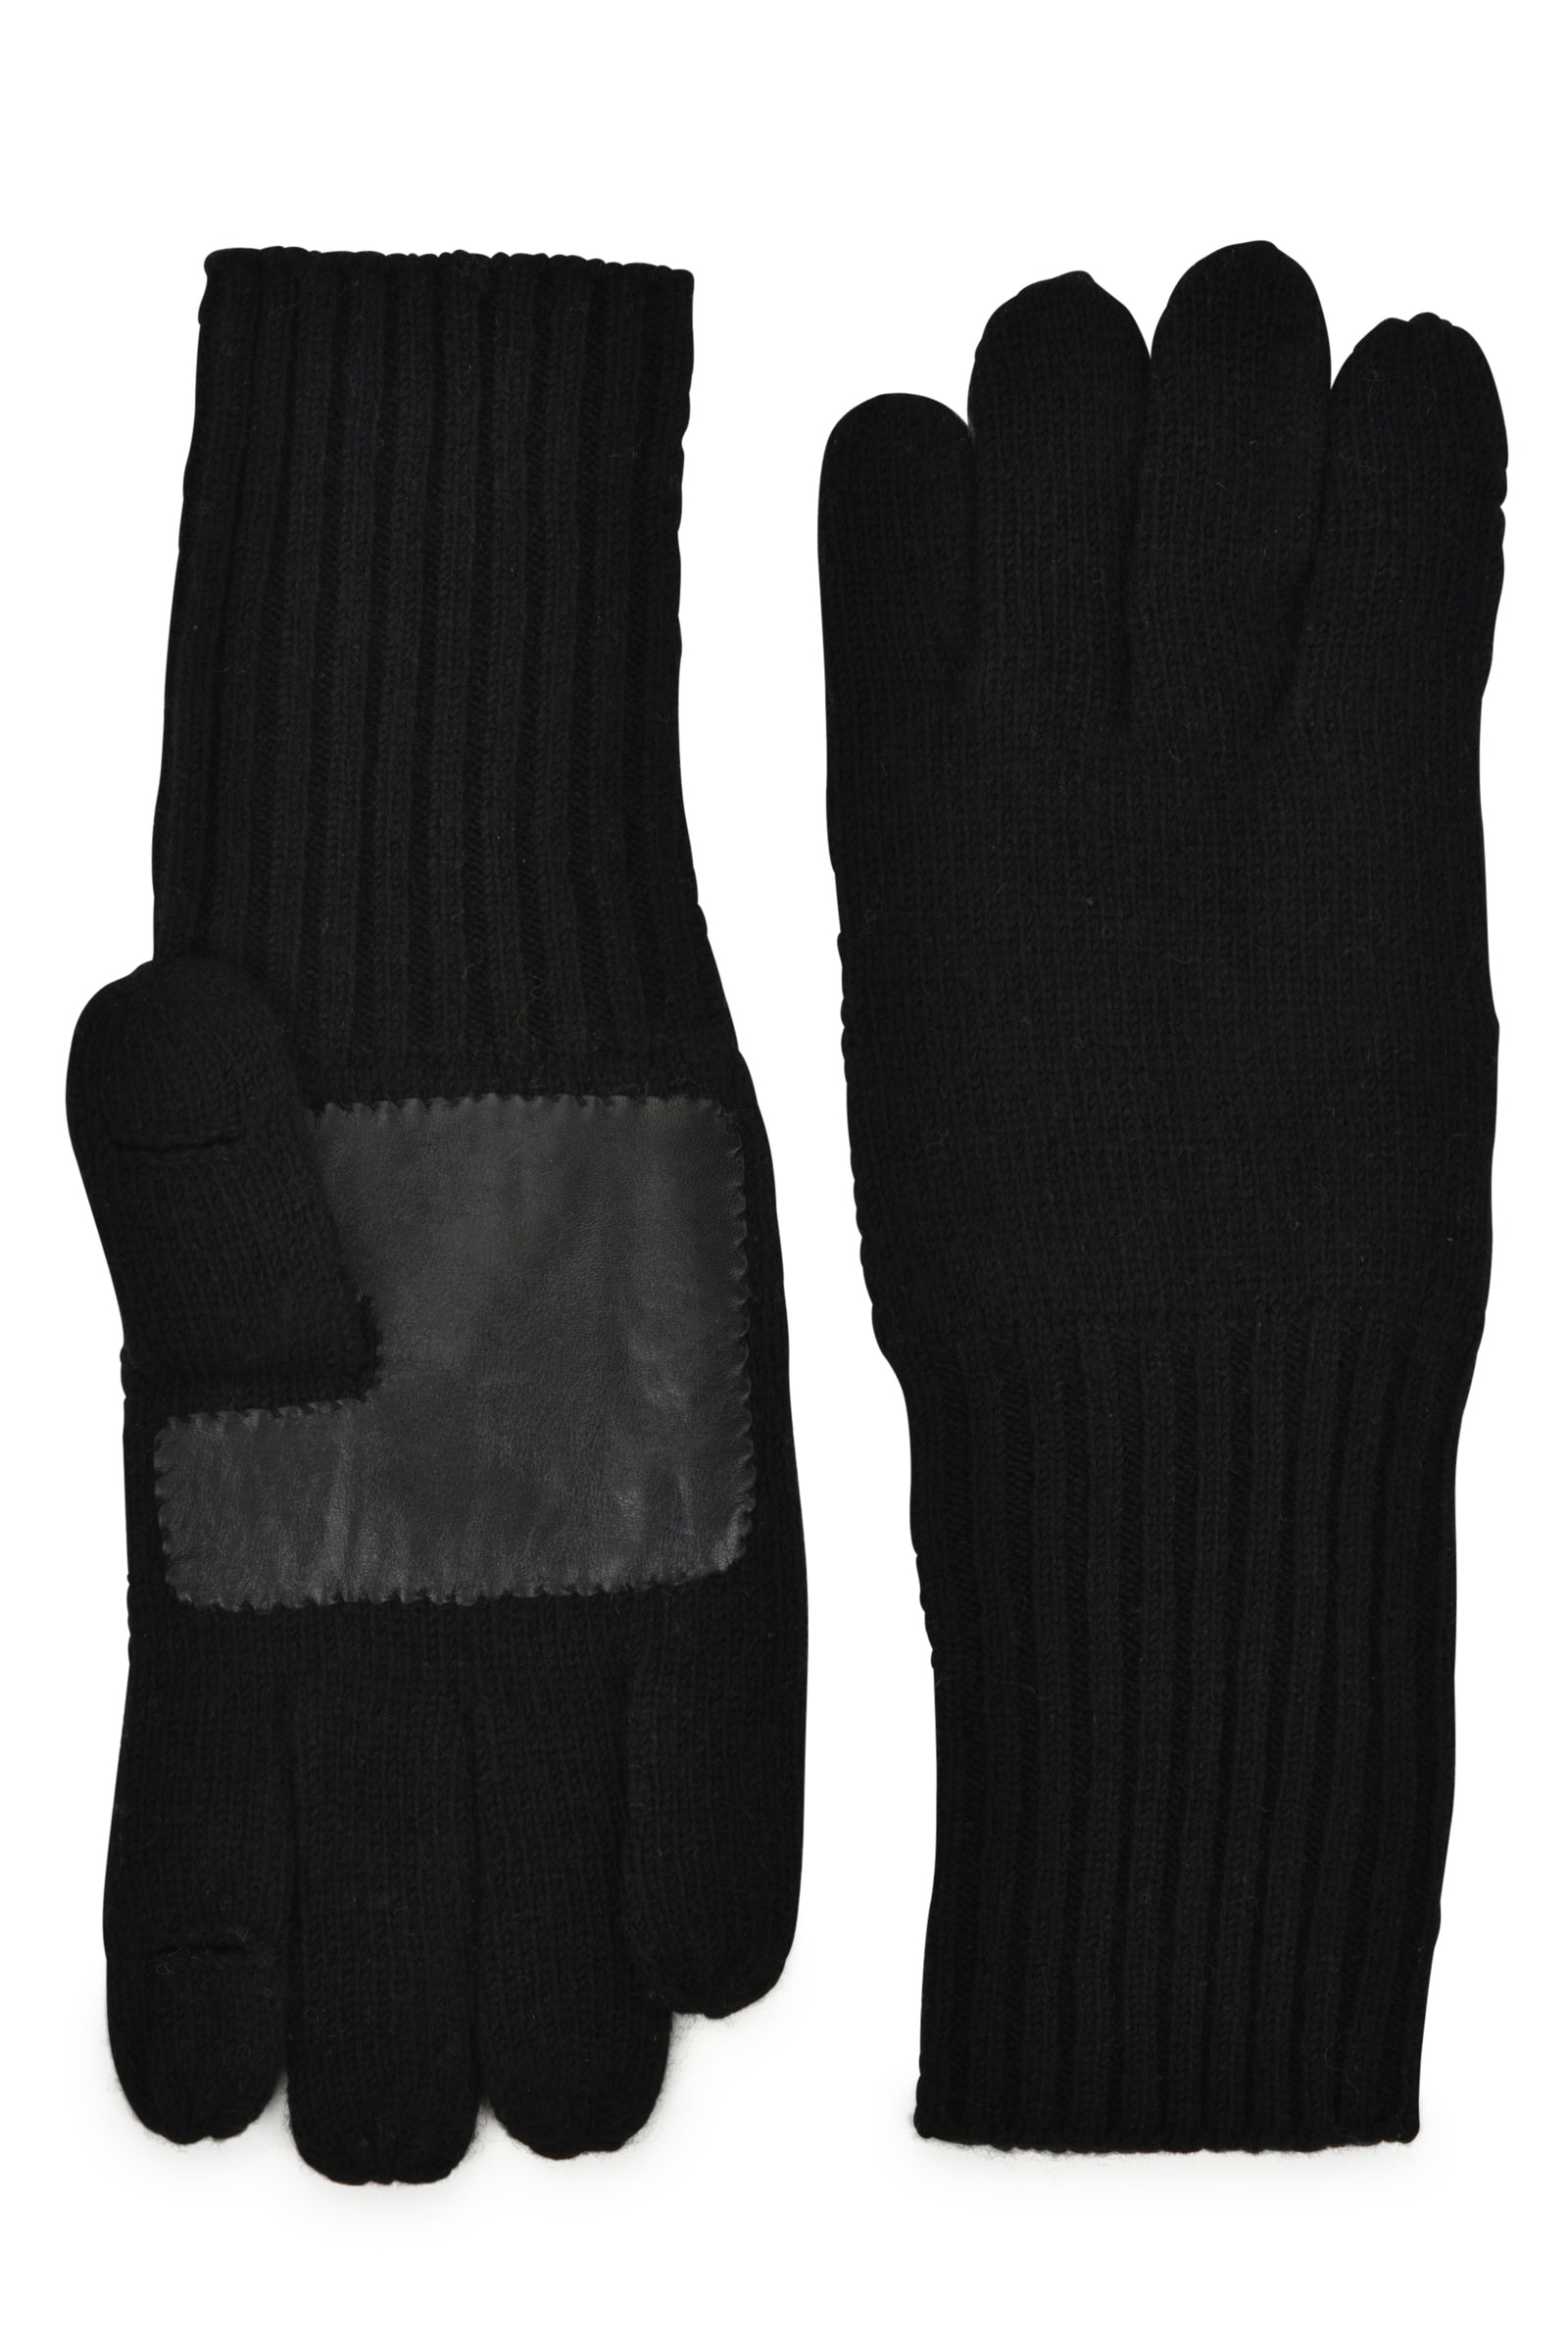 mens black wool blend knit over the wrist length glove